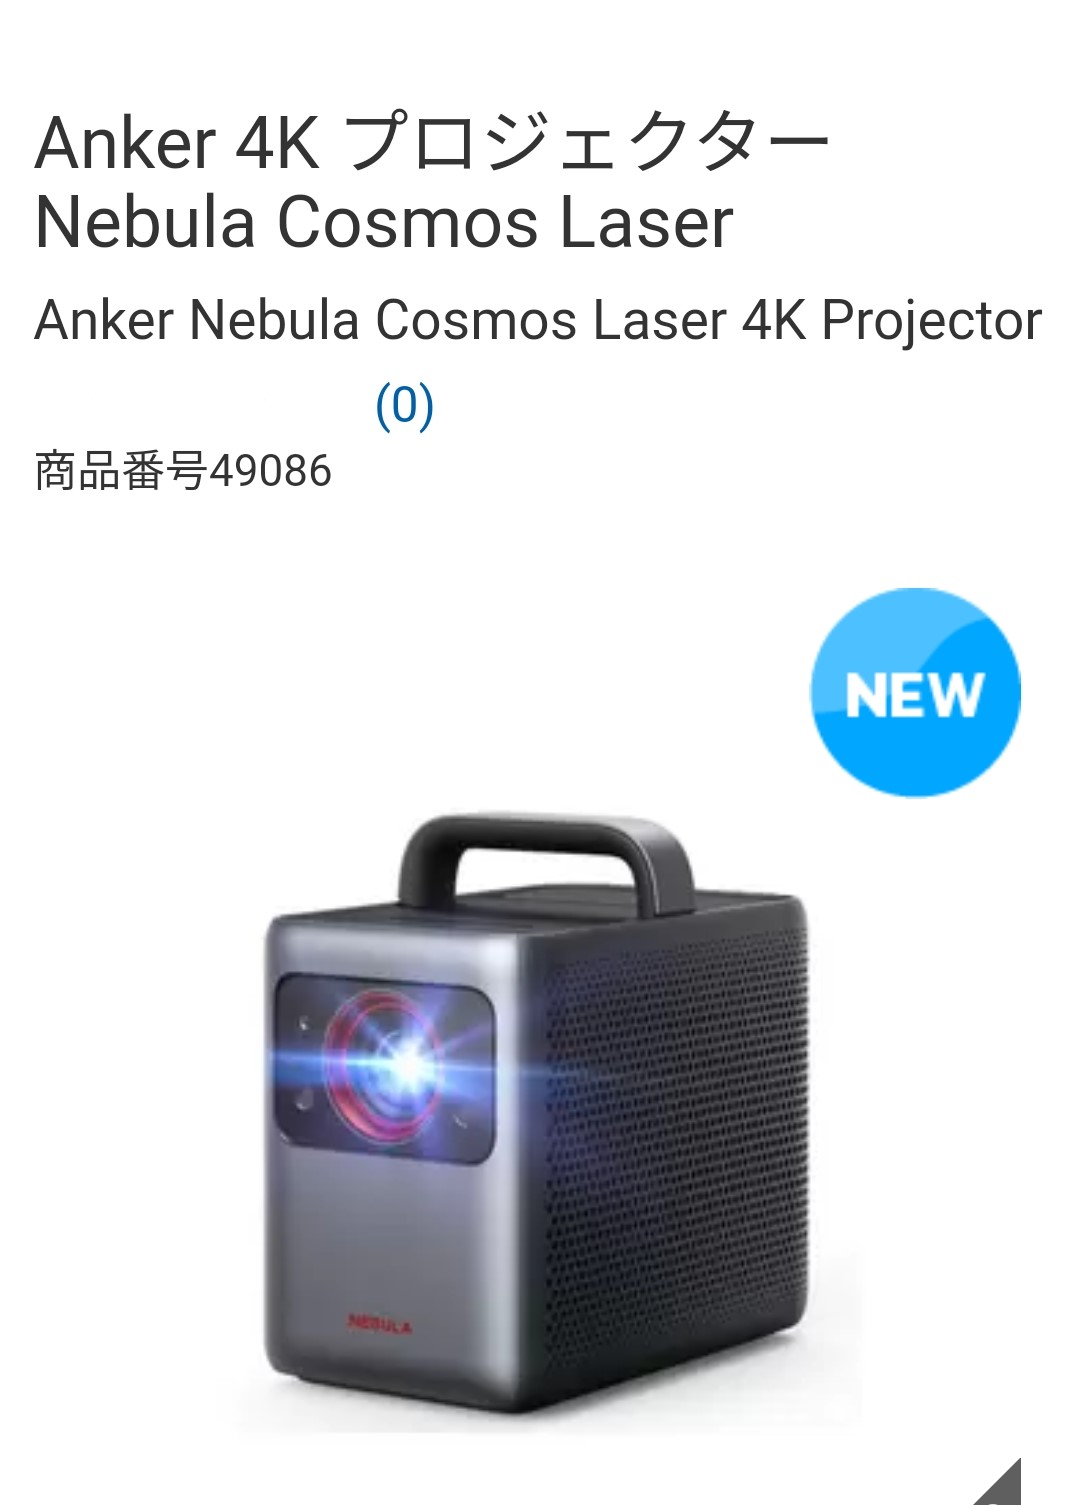 NEBULA Cosmos Laser